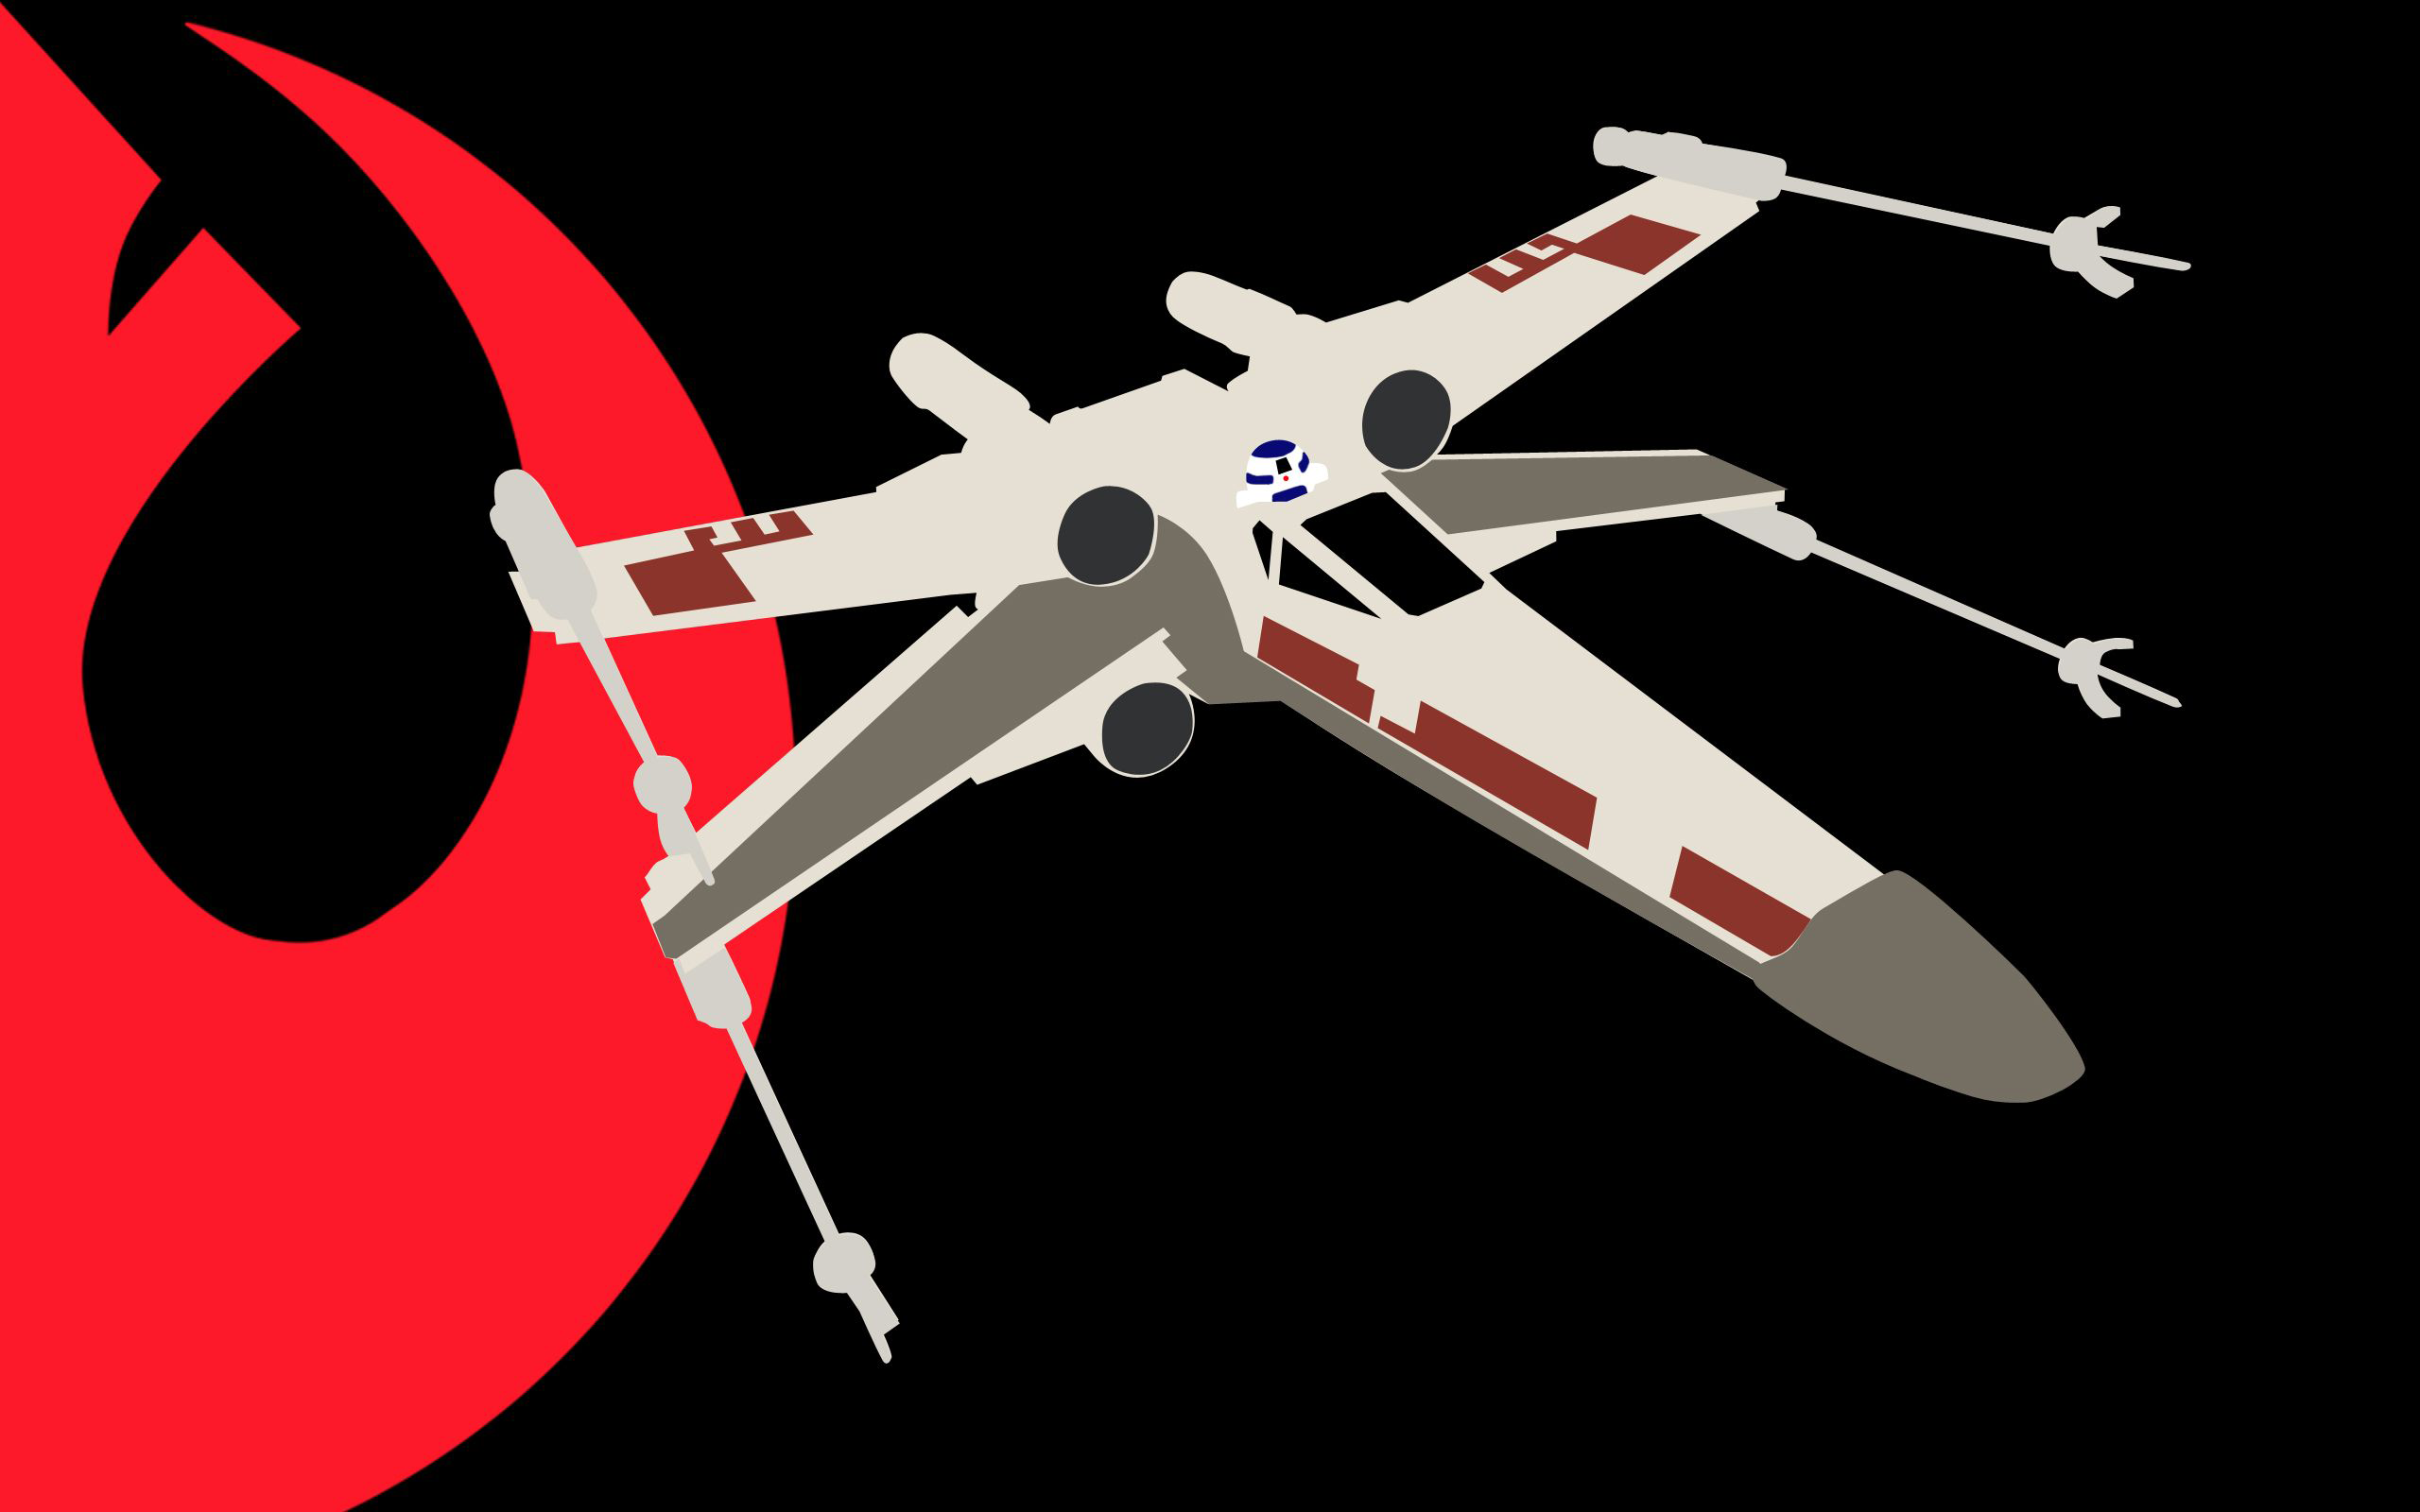 General 2560x1600 Star Wars X-wing Rebel Alliance spaceship minimalism vehicle Star Wars Ships black background simple background science fiction